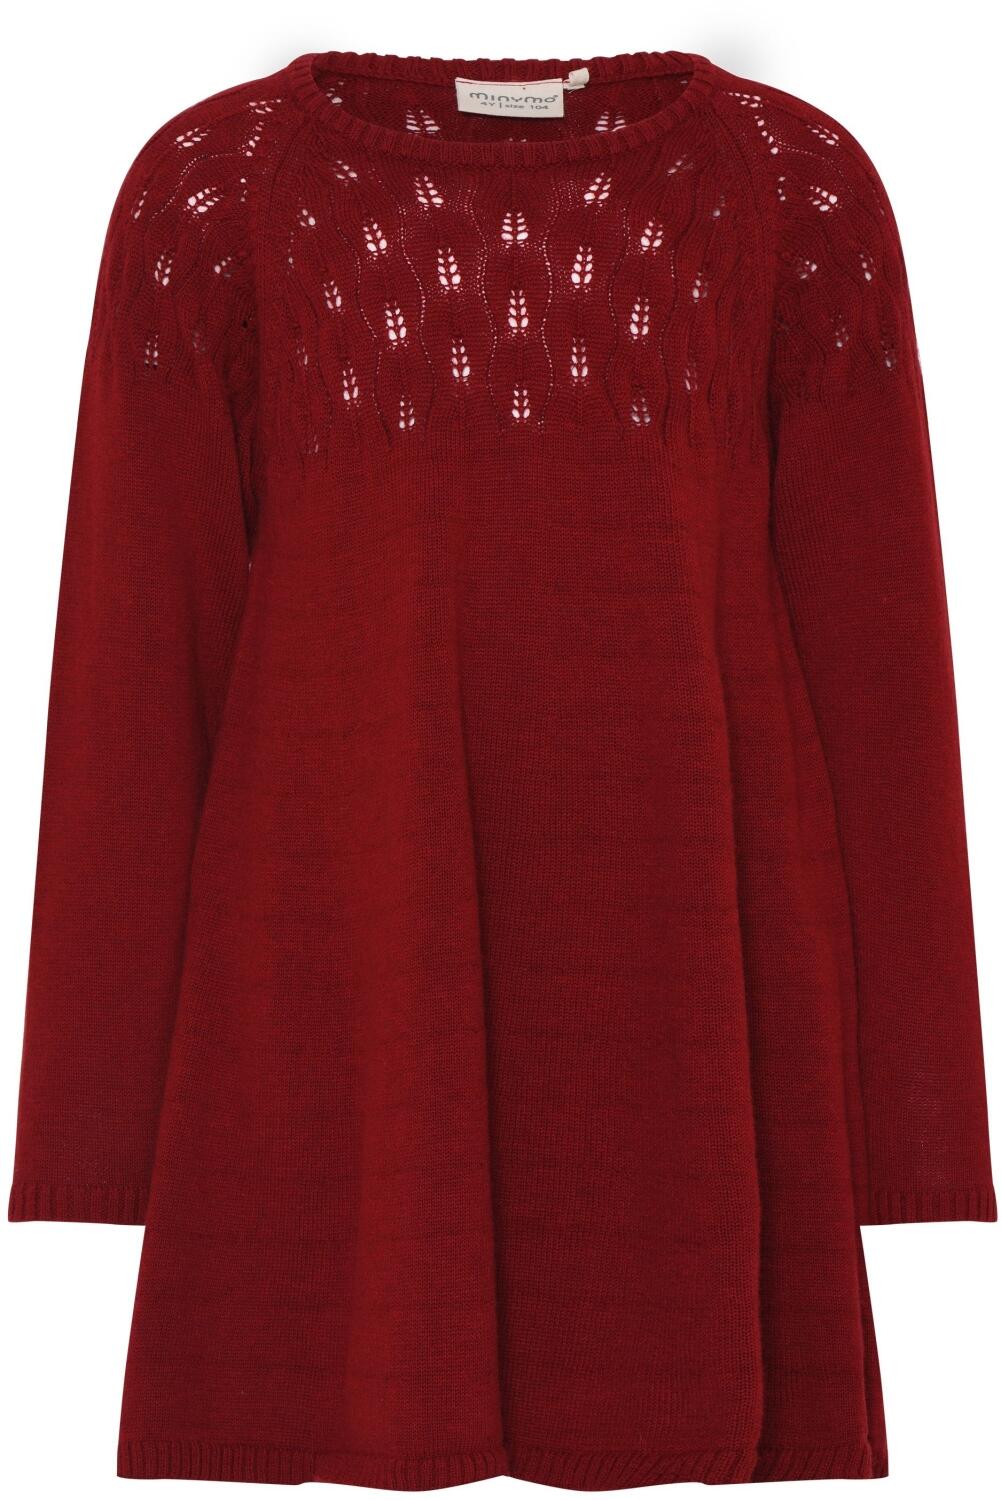 minymo Mädchen Kleid Strickkleid rot